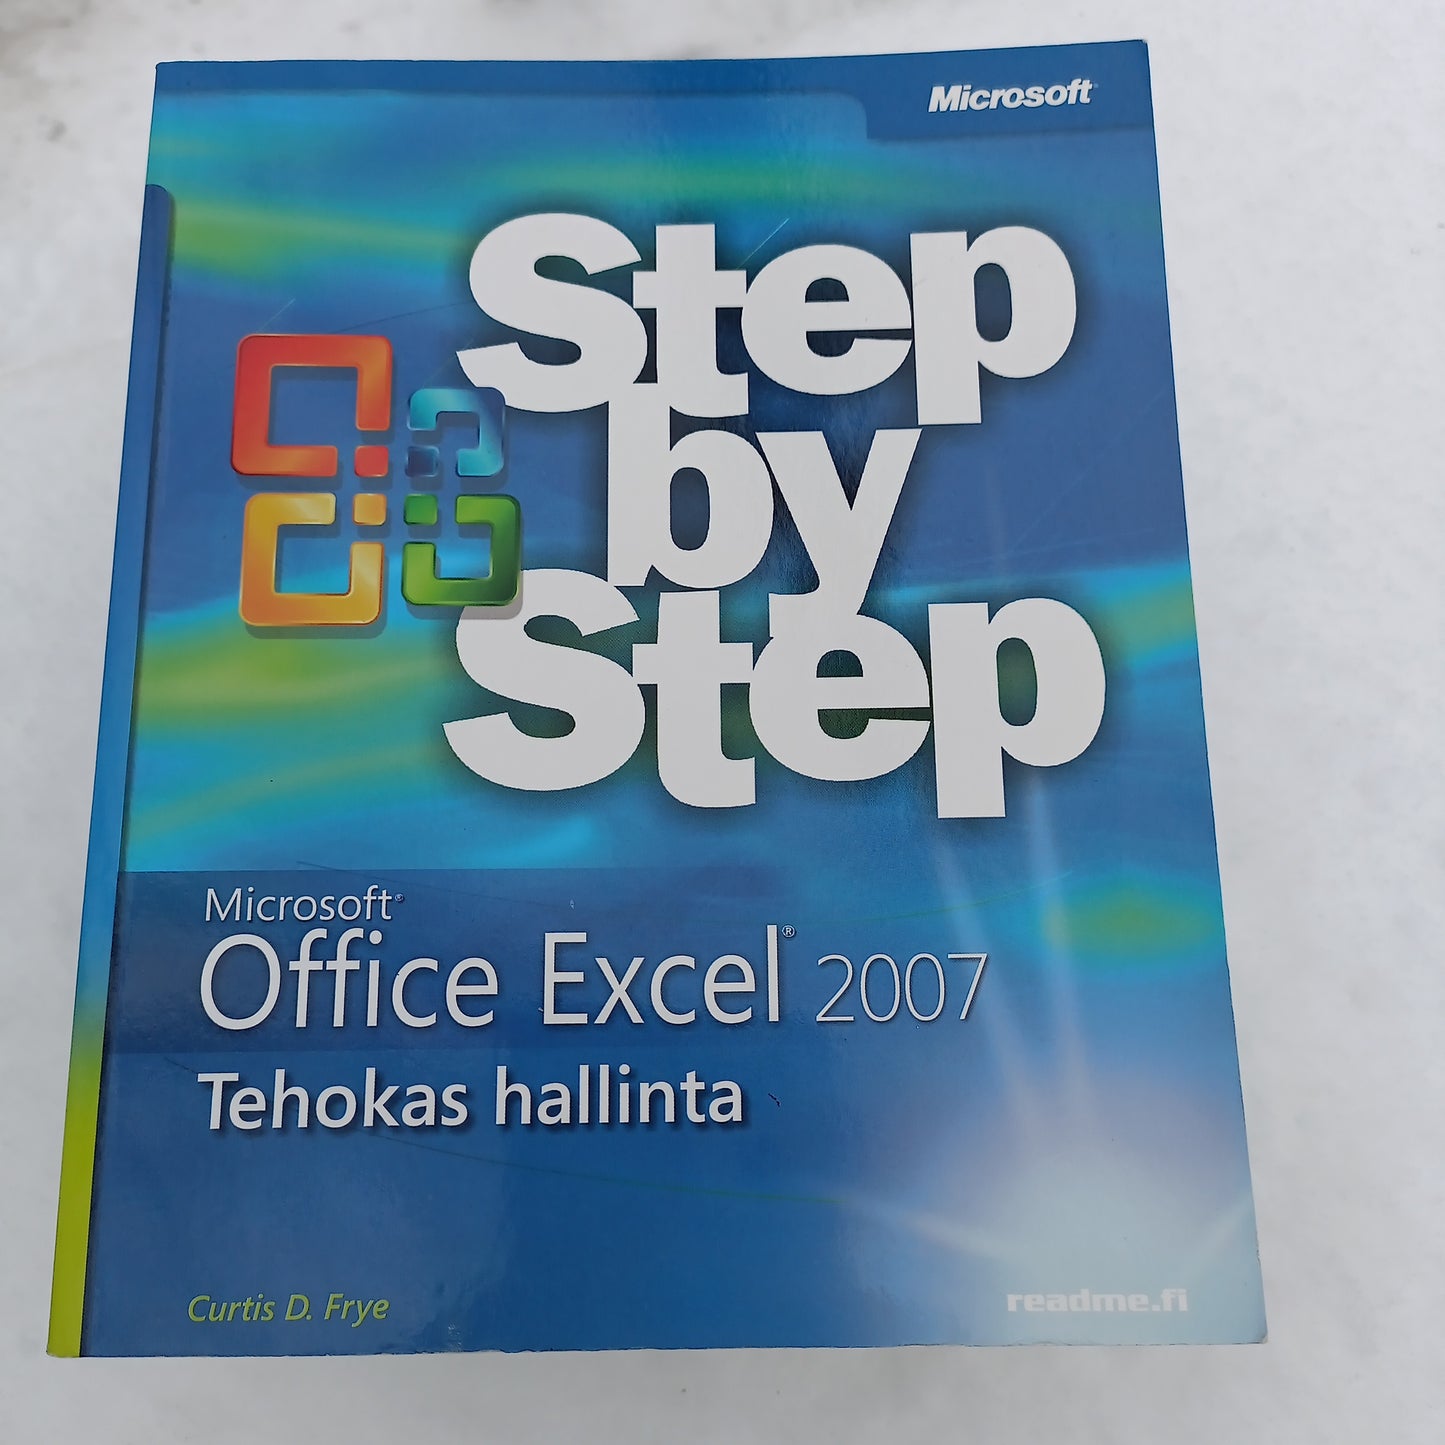 Microsoft Office Excel 2007 - Tehokas hallinta - Step by Step